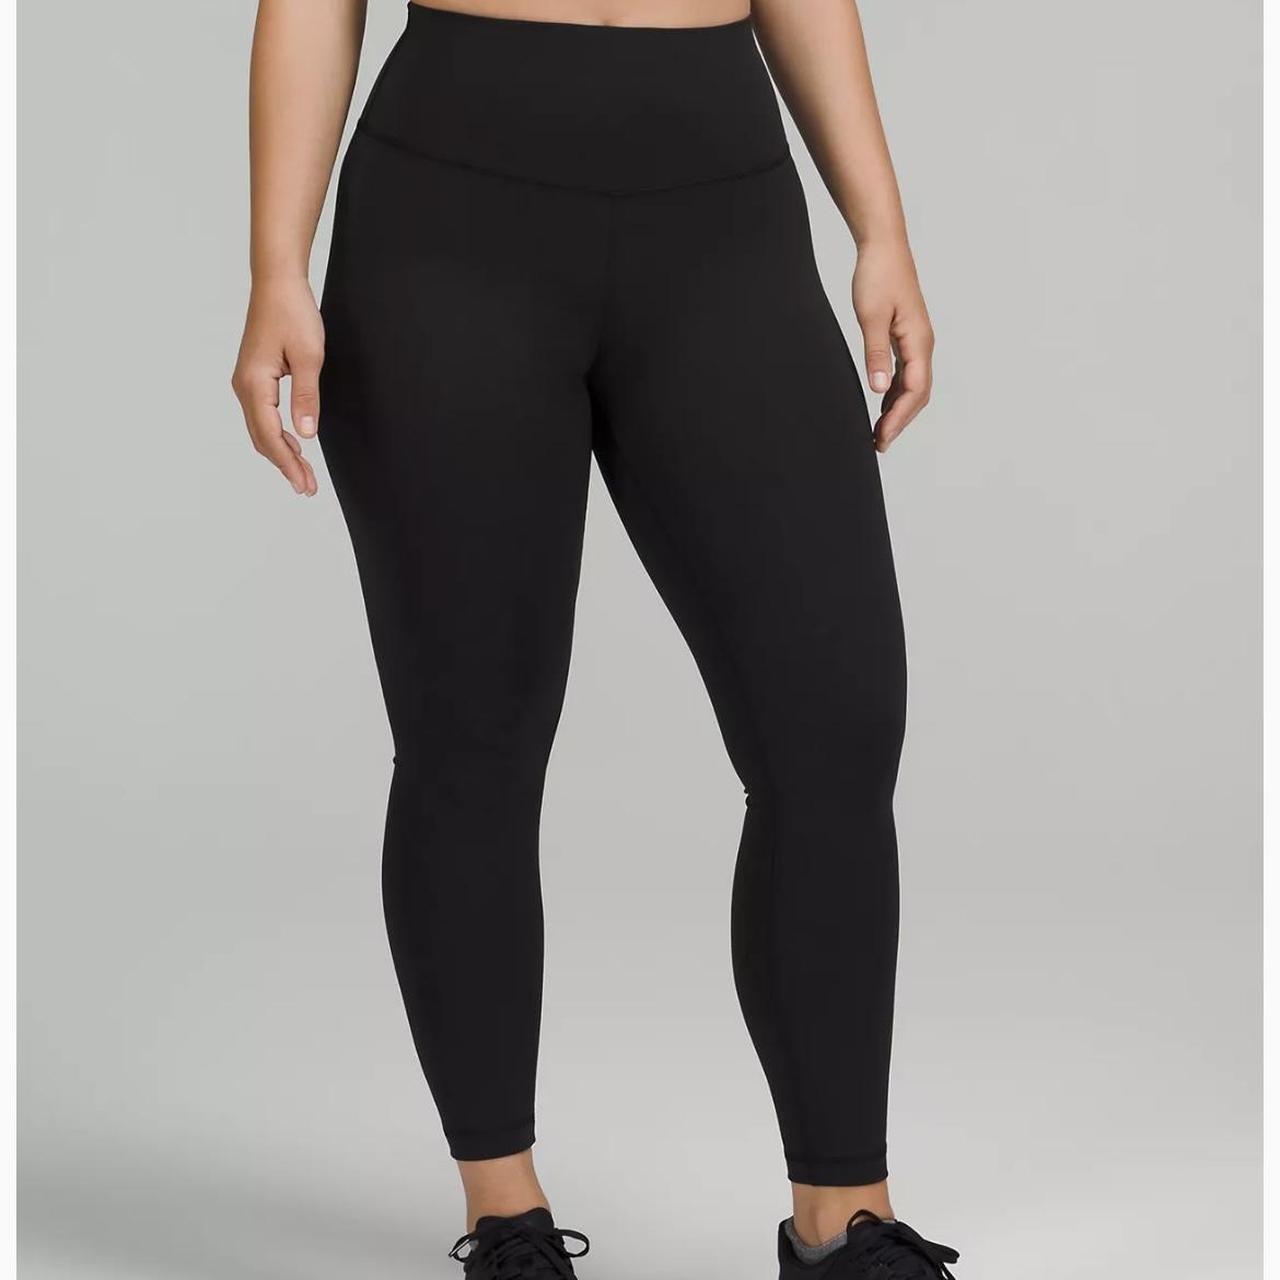 Nike Ladies High Waisted Tight Fit Regular length - Depop